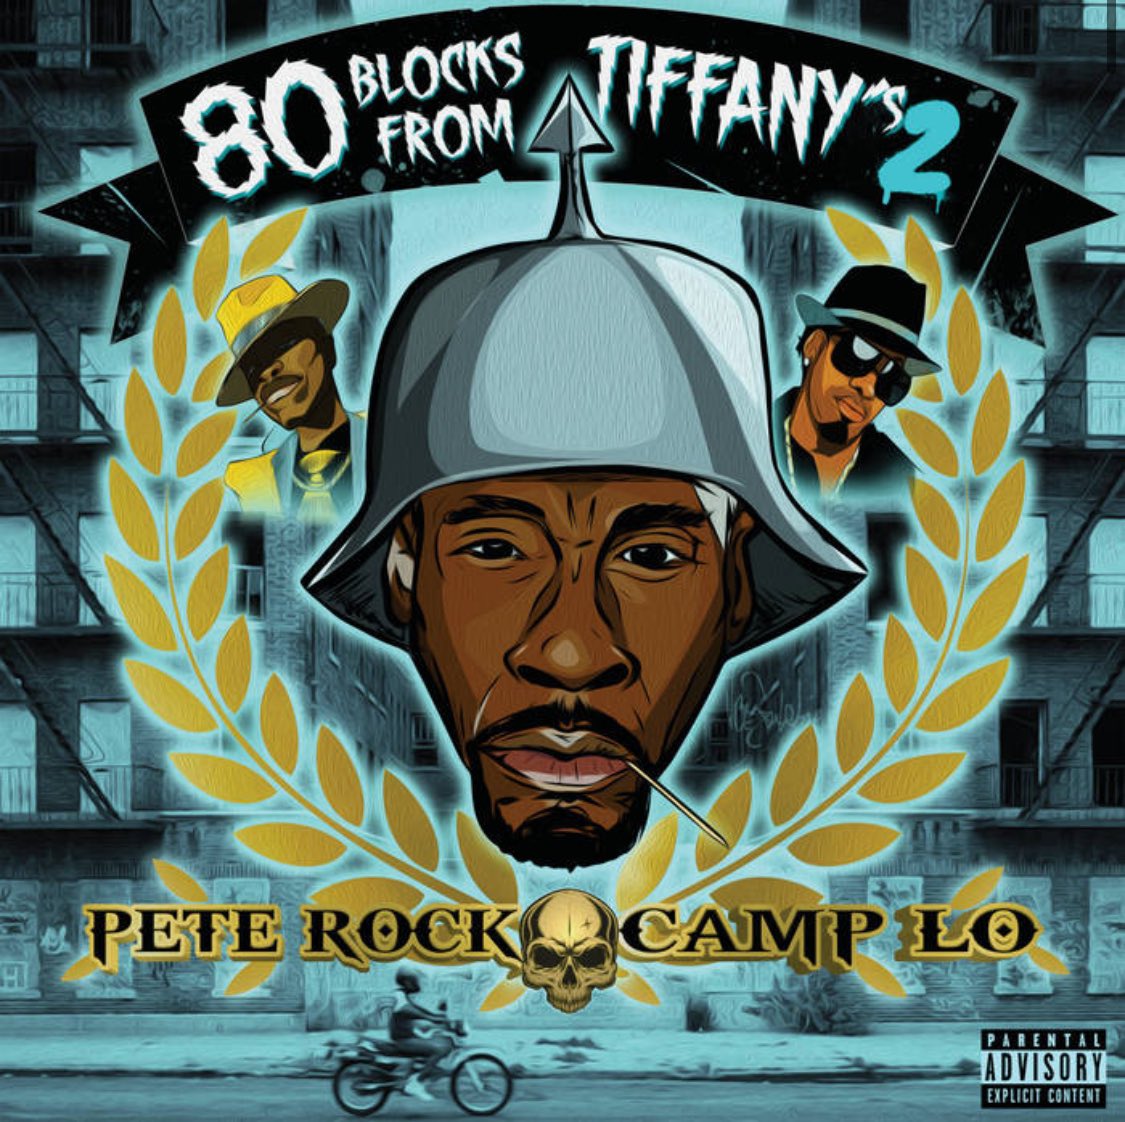 Rap History: Camp Lo & Pete Rock (@PeteRock) - ‘80 Blocks From Tiffany's II’, released May 22, 2020.